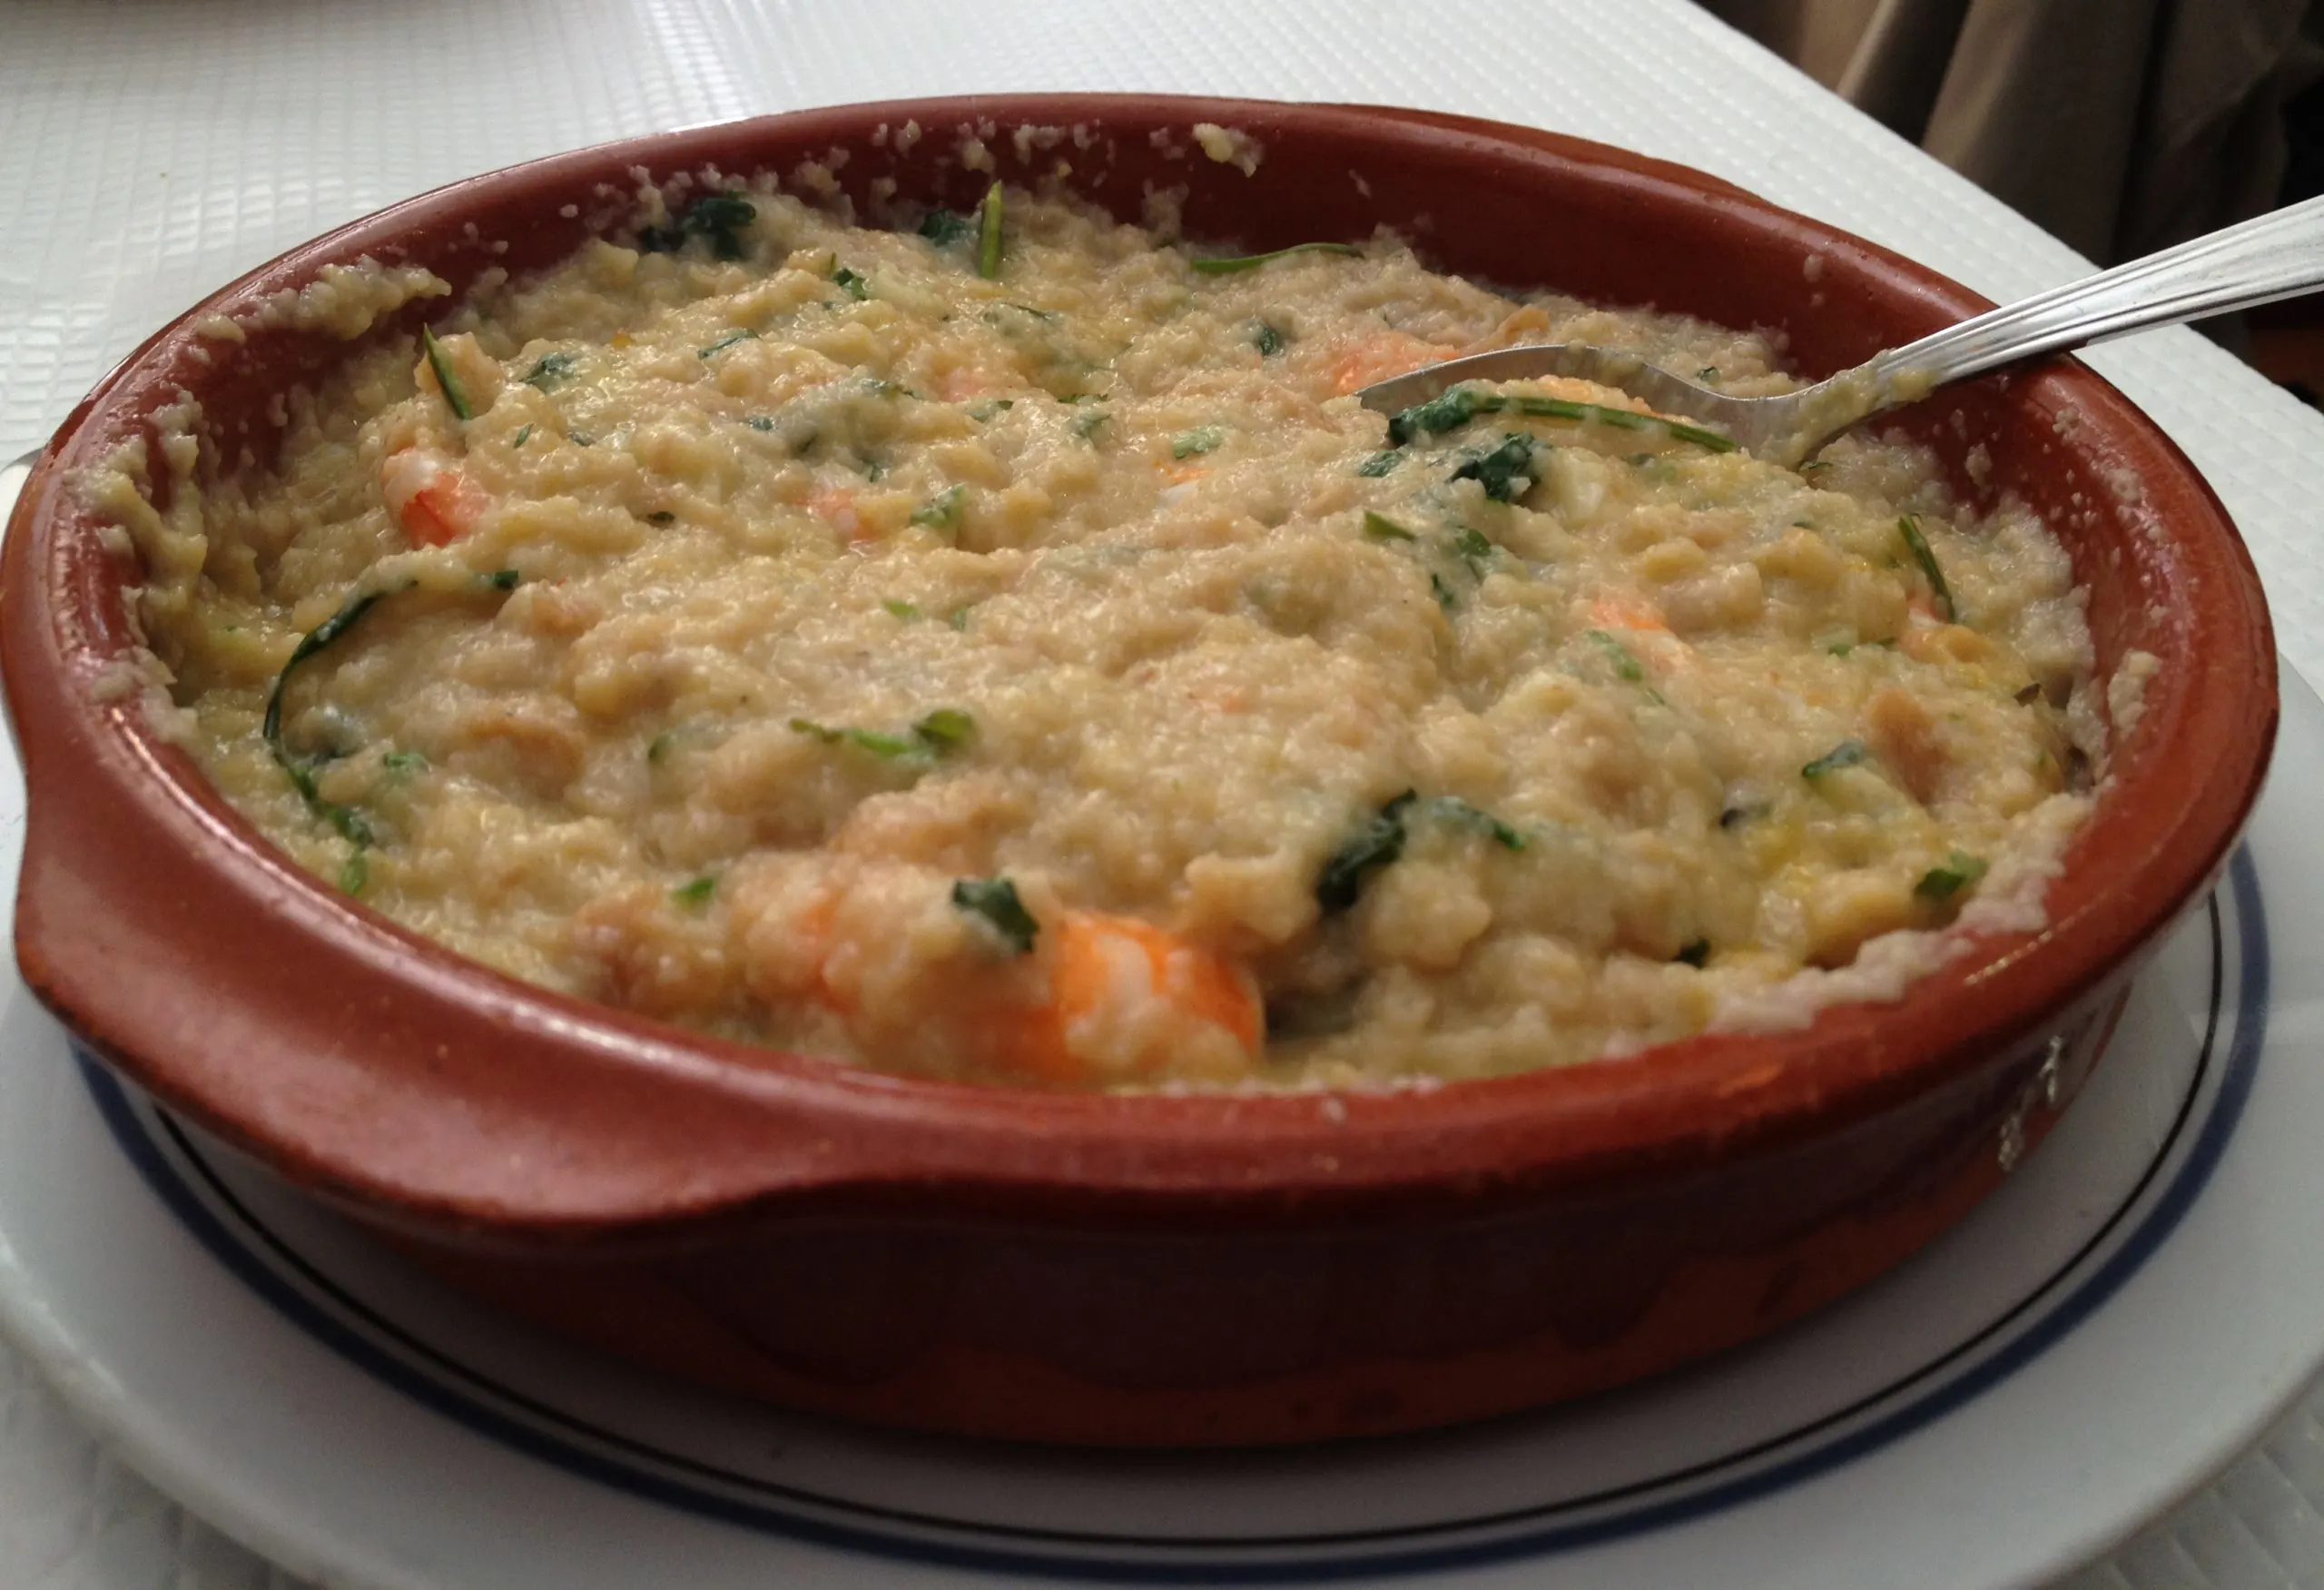 Portuguese Food, Portuguese cuisine, Traditional Portuguese Food, food in Portugal, Portuguese dishes, Açorda